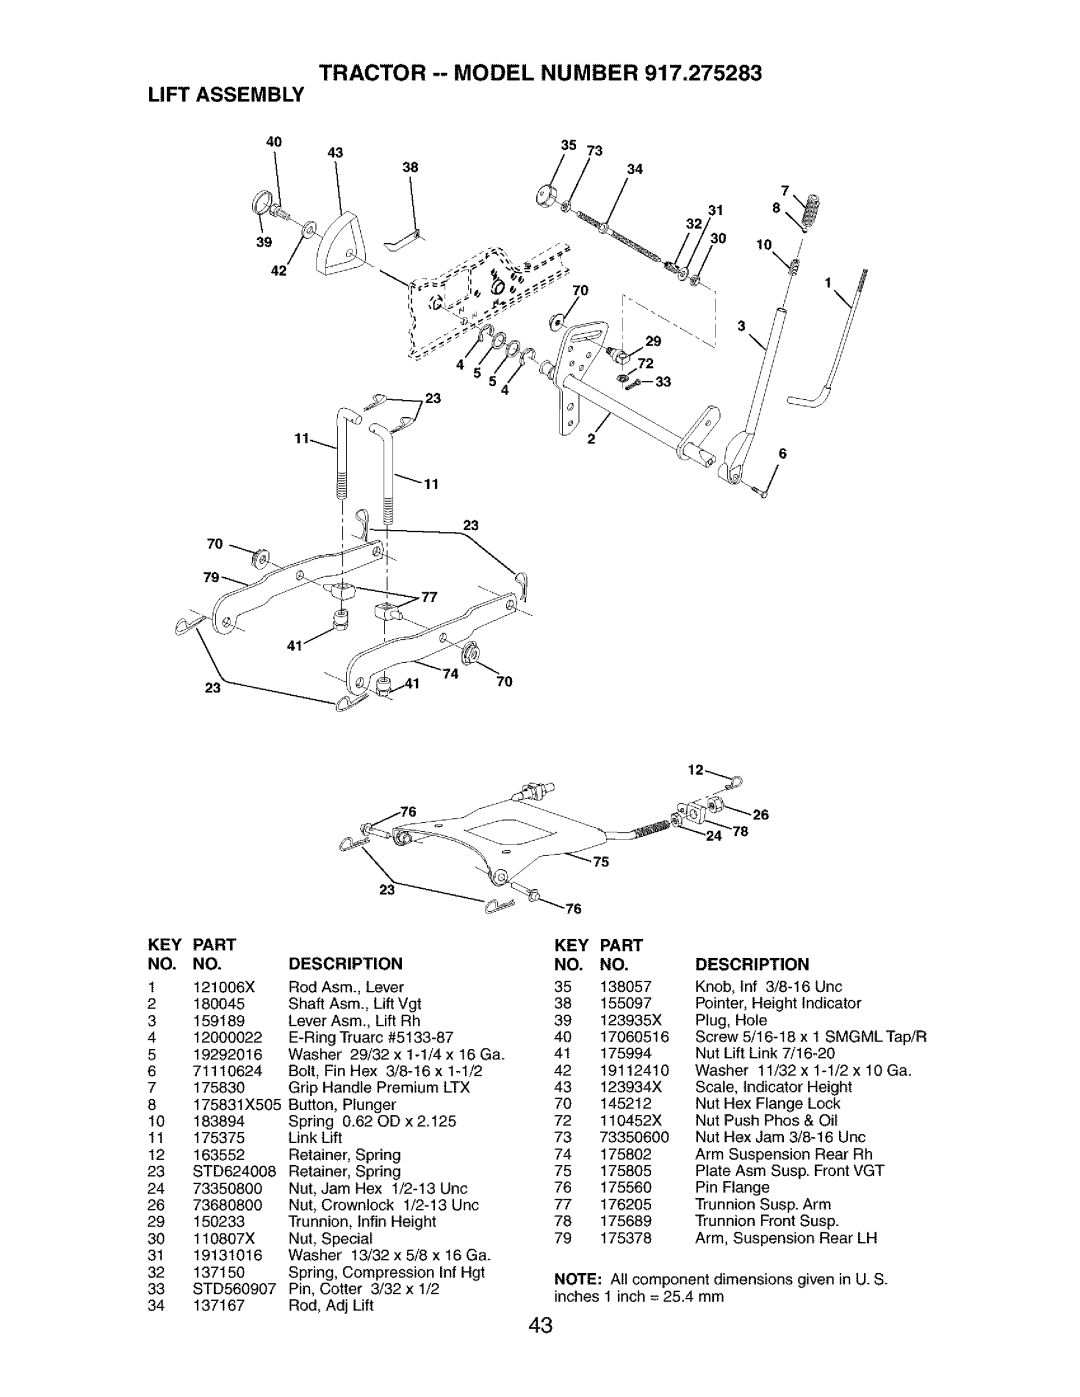 Craftsman 917.275283 owner manual Tractor --Model Number Lift Assembly, Part, Description, 23 70 70 